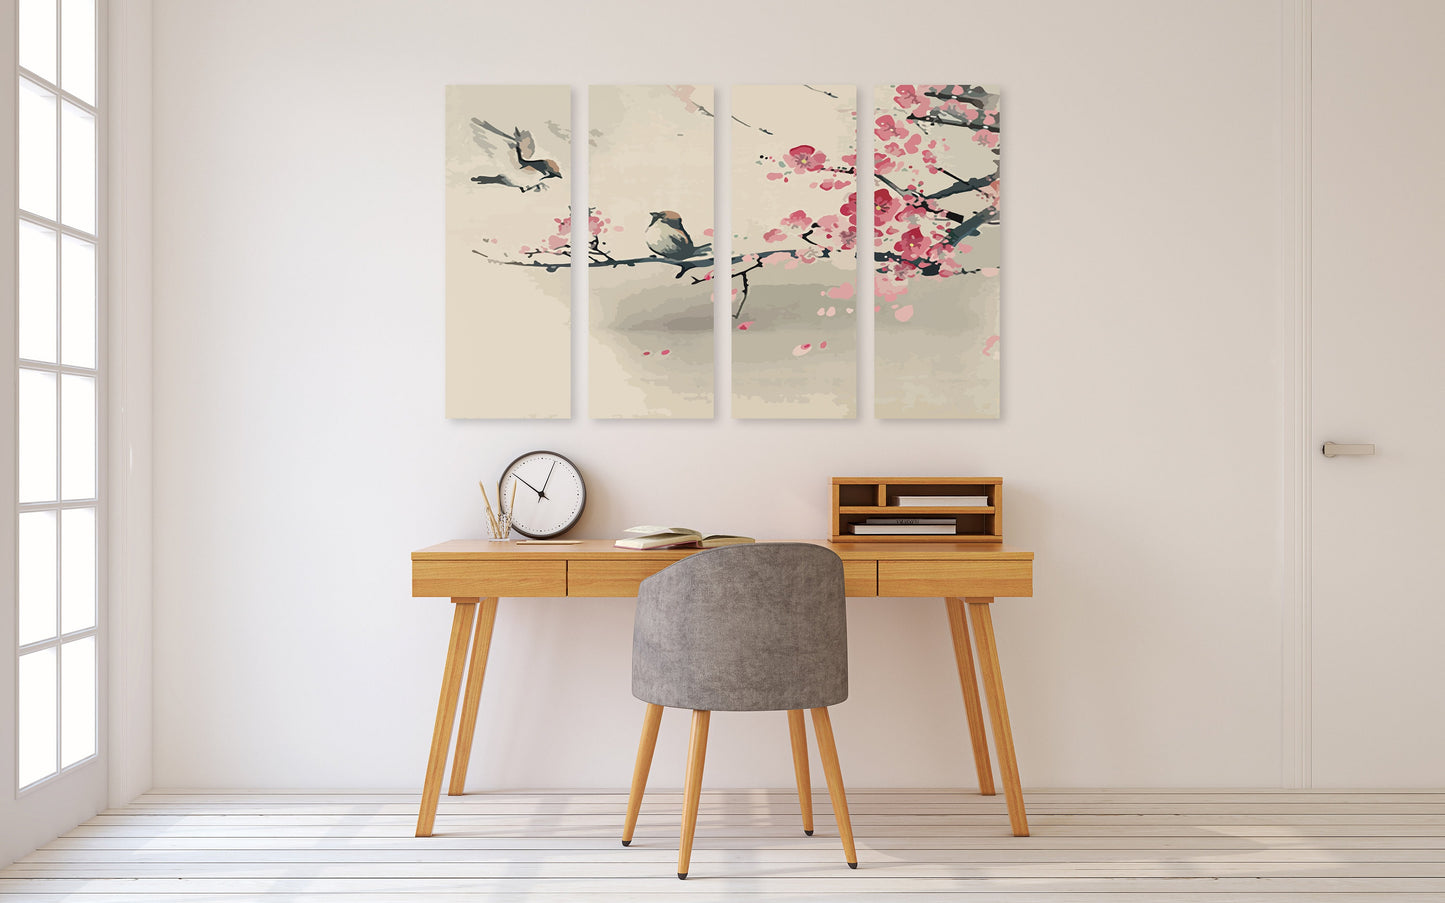 Sakura bonsai tree wall art, sakura blossoms canvas painting, floral asian wall decor japanese wall art bird prints wall art gift home decor